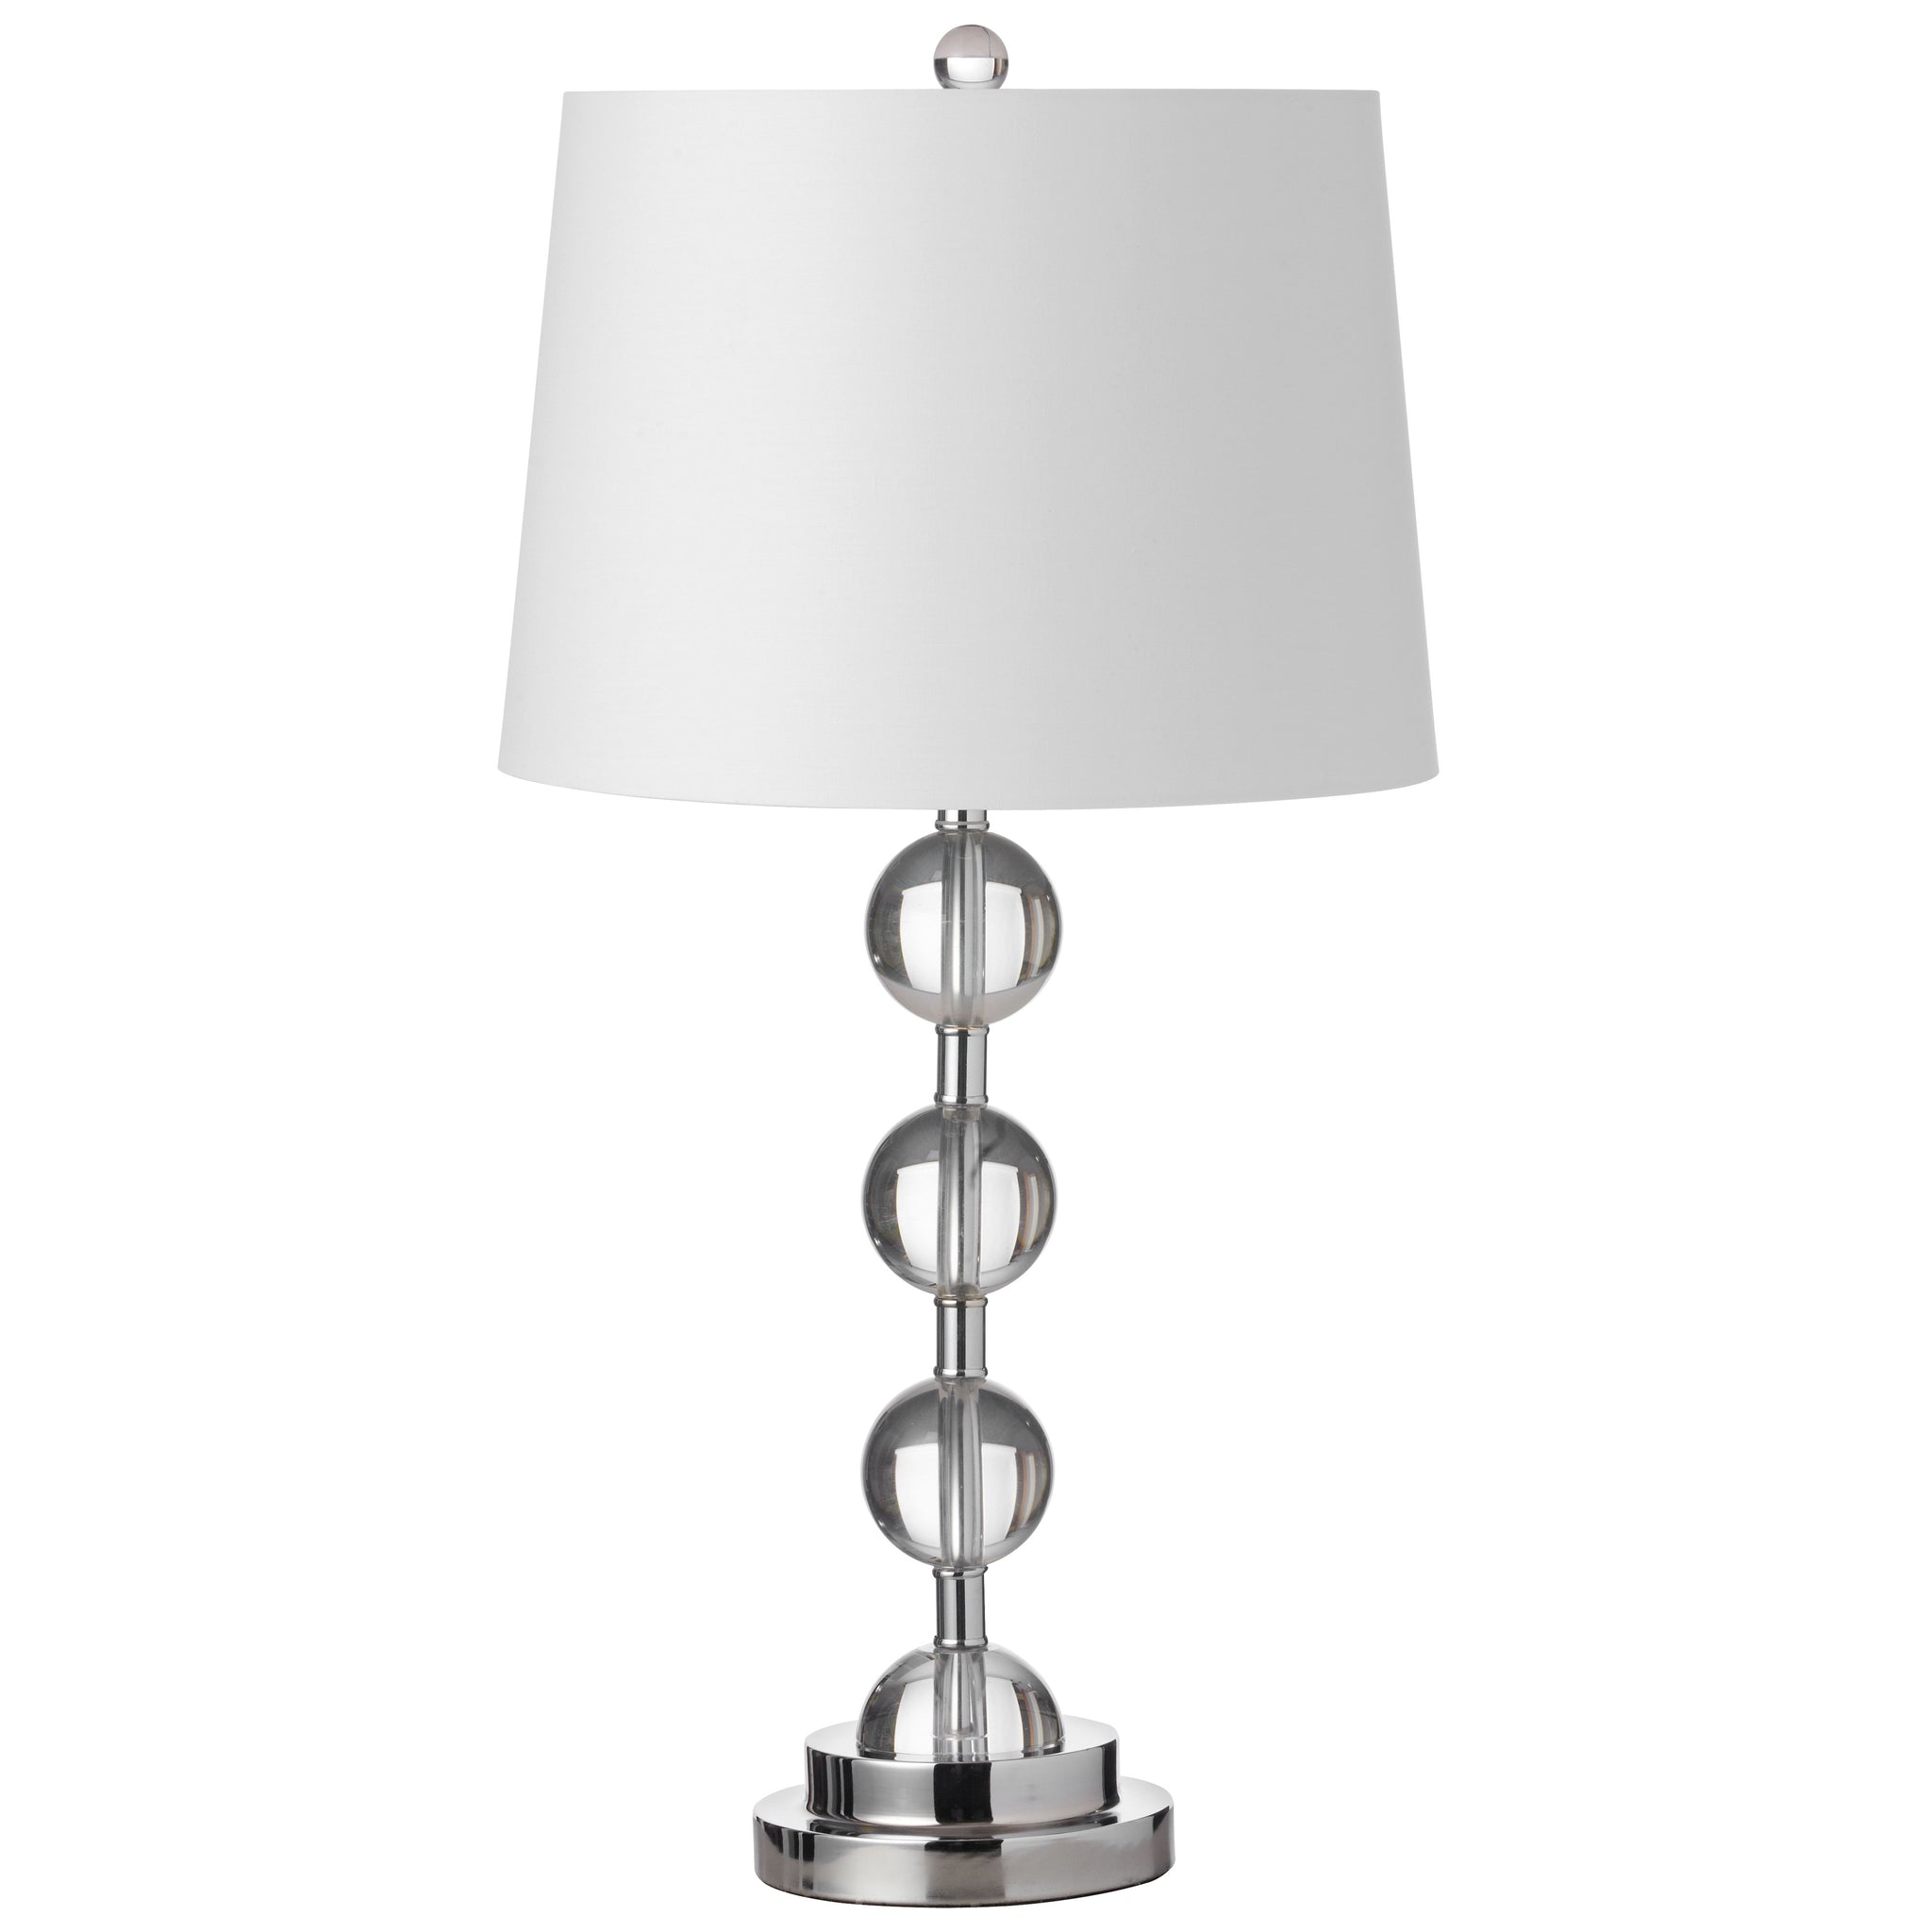 Shop Table Lamps online | Carrington Lighting